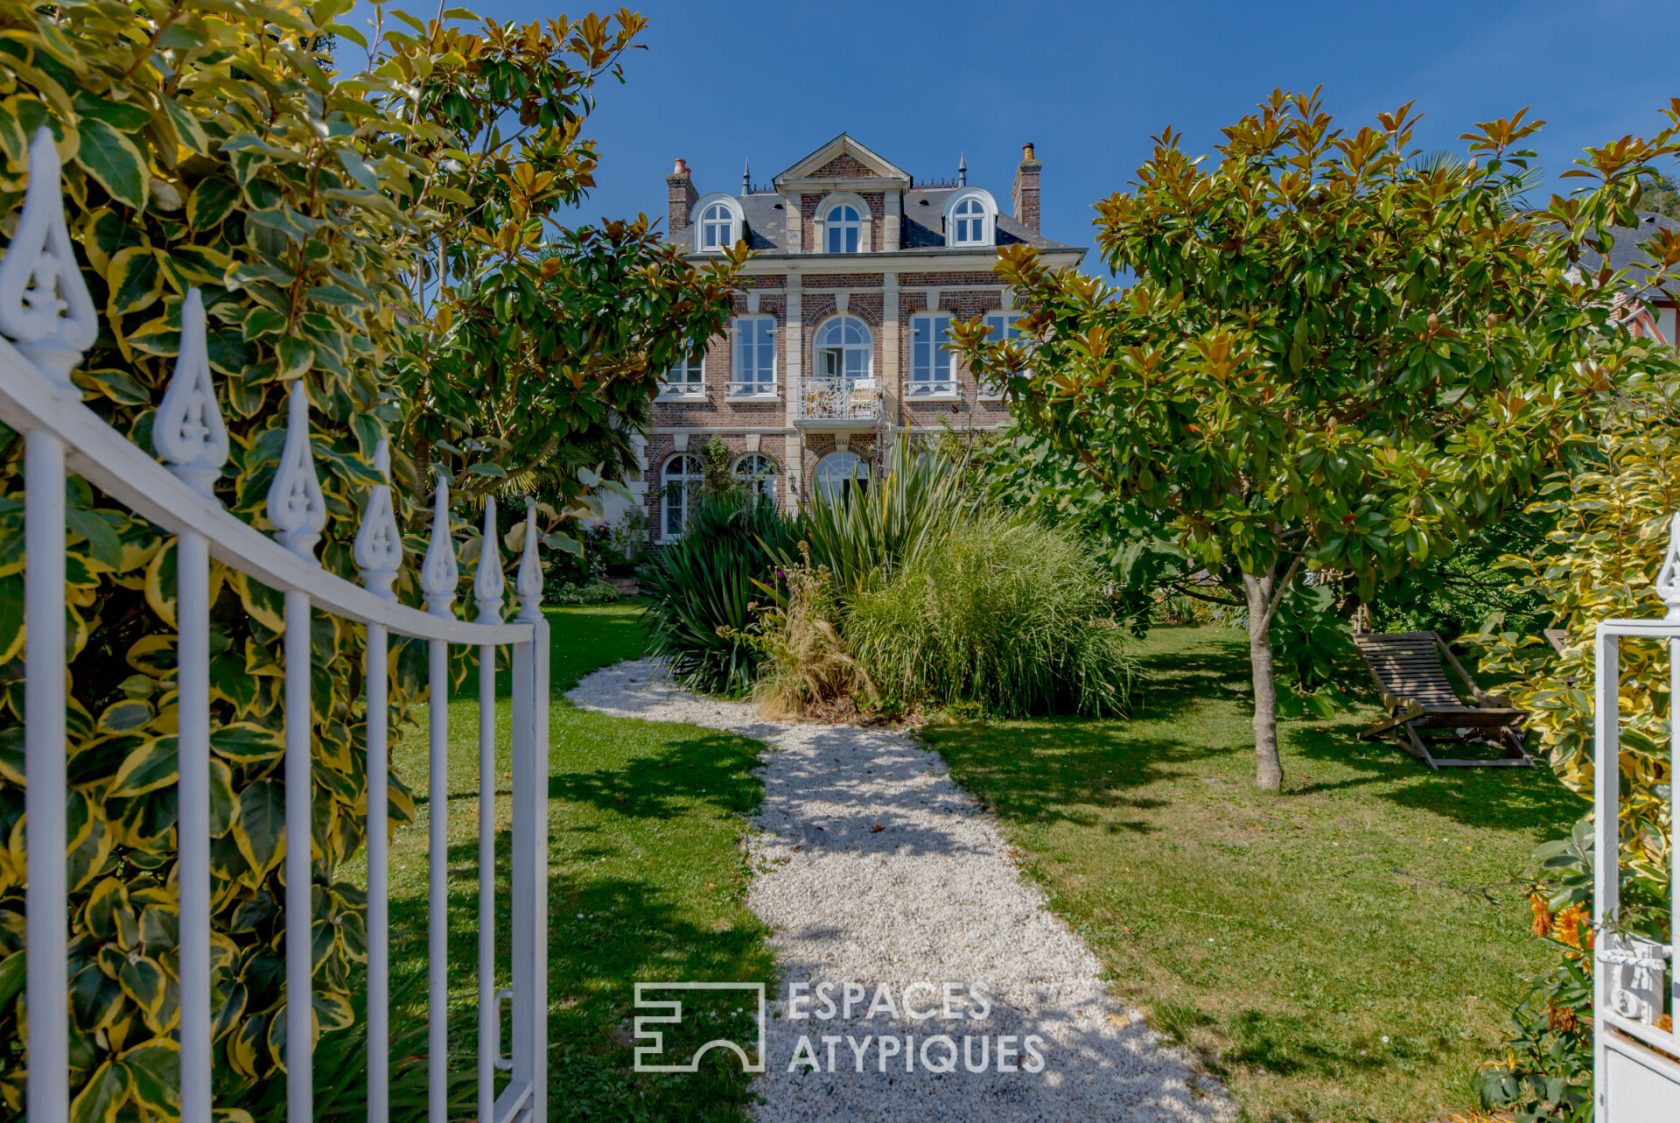 19th century master villa on the banks of the Seine